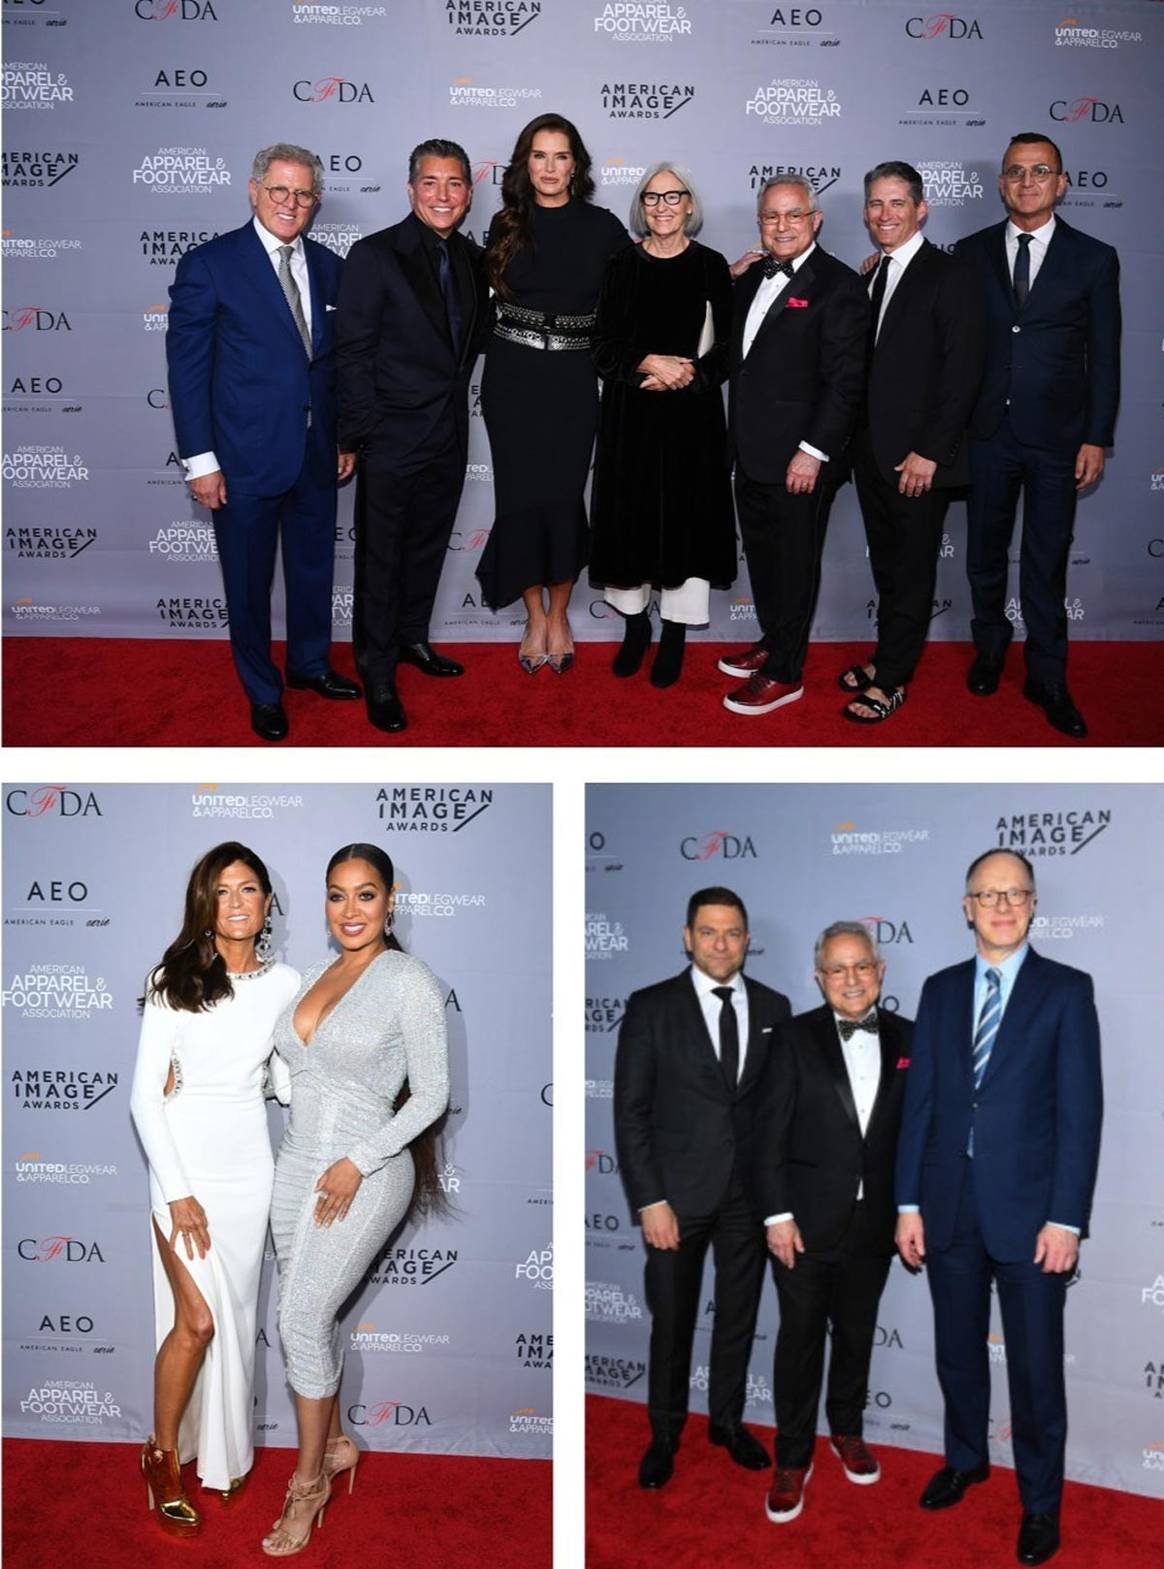 AAFA held 41st annual American Image Awards in NYC